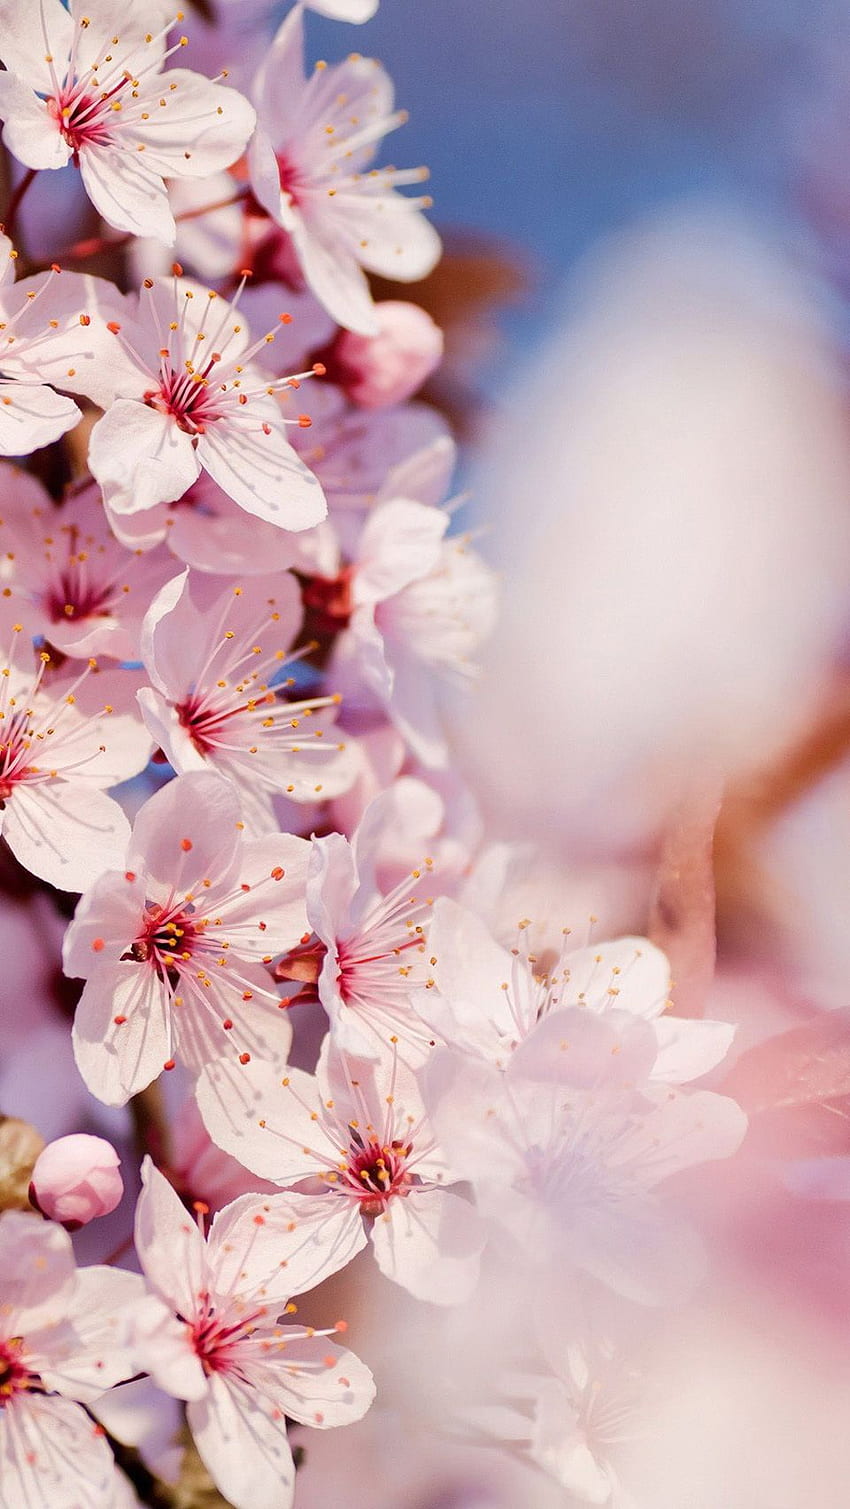 iPhone 6 Cherry Blossom 968 completo, flor de cerezo japonés fondo de pantalla del teléfono